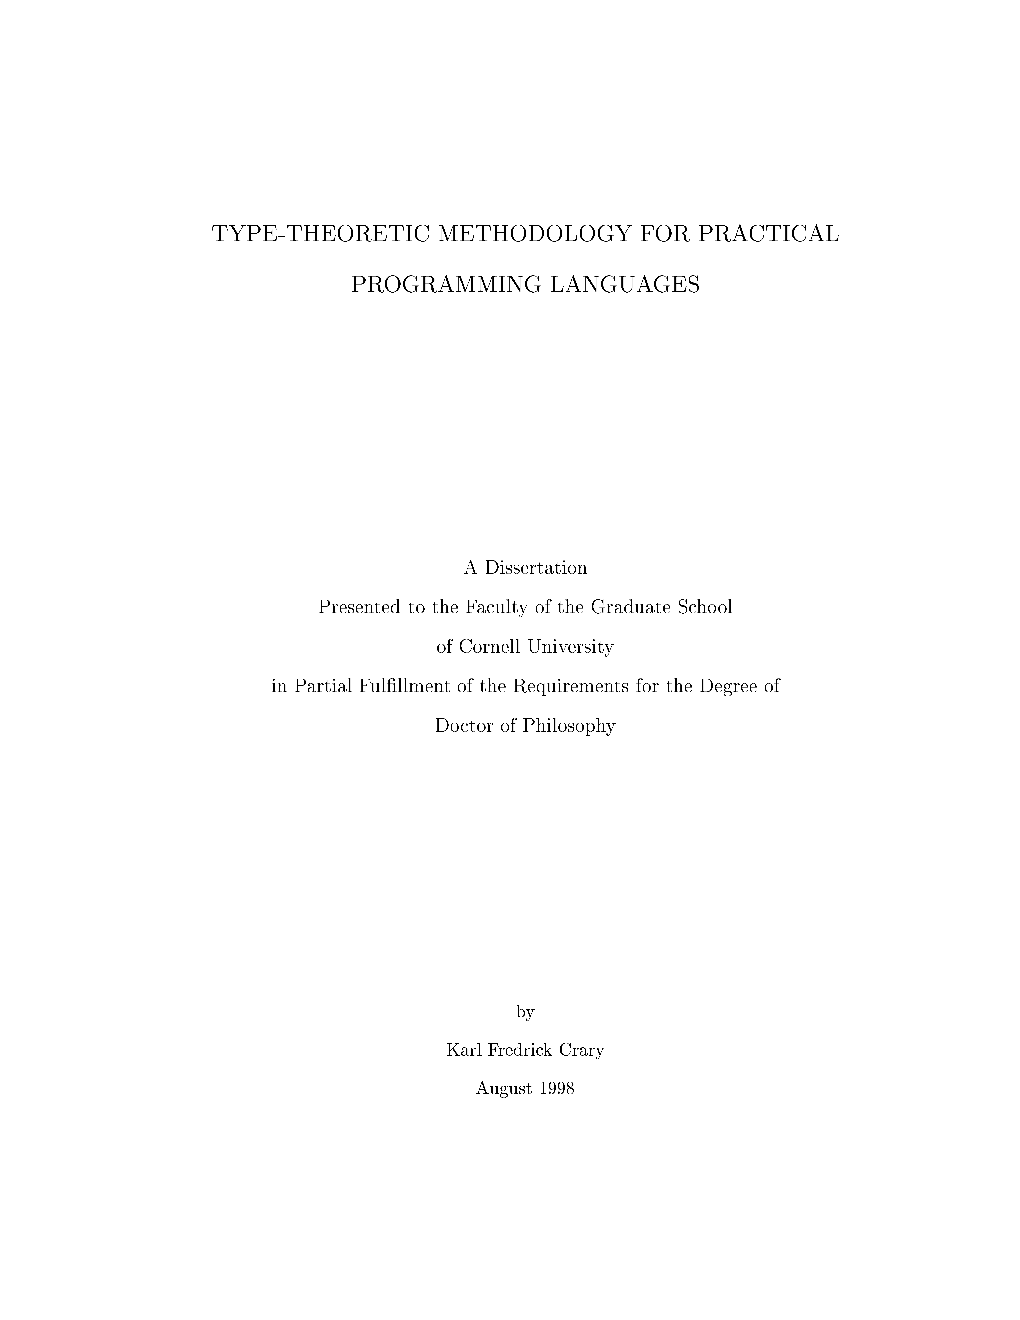 Type-Theoretic Methodology for Practical Programming Languages